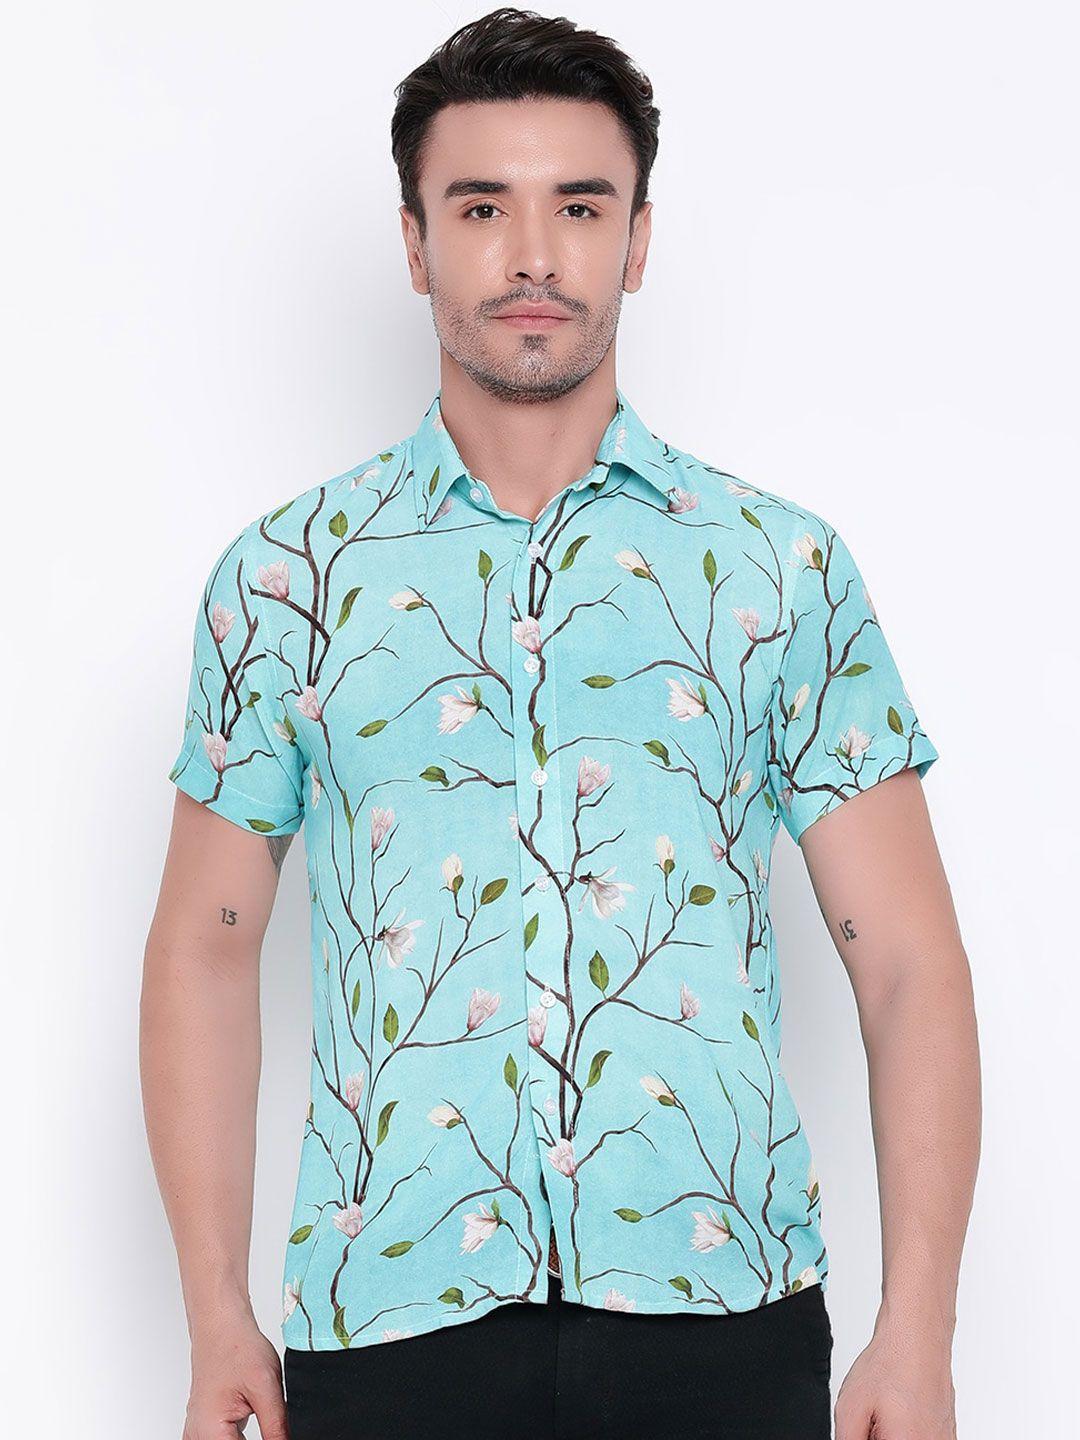 shurtz-n-skurtz-floral-printed-relaxed-regular-fit-spread-collar-cotton-casual-shirt